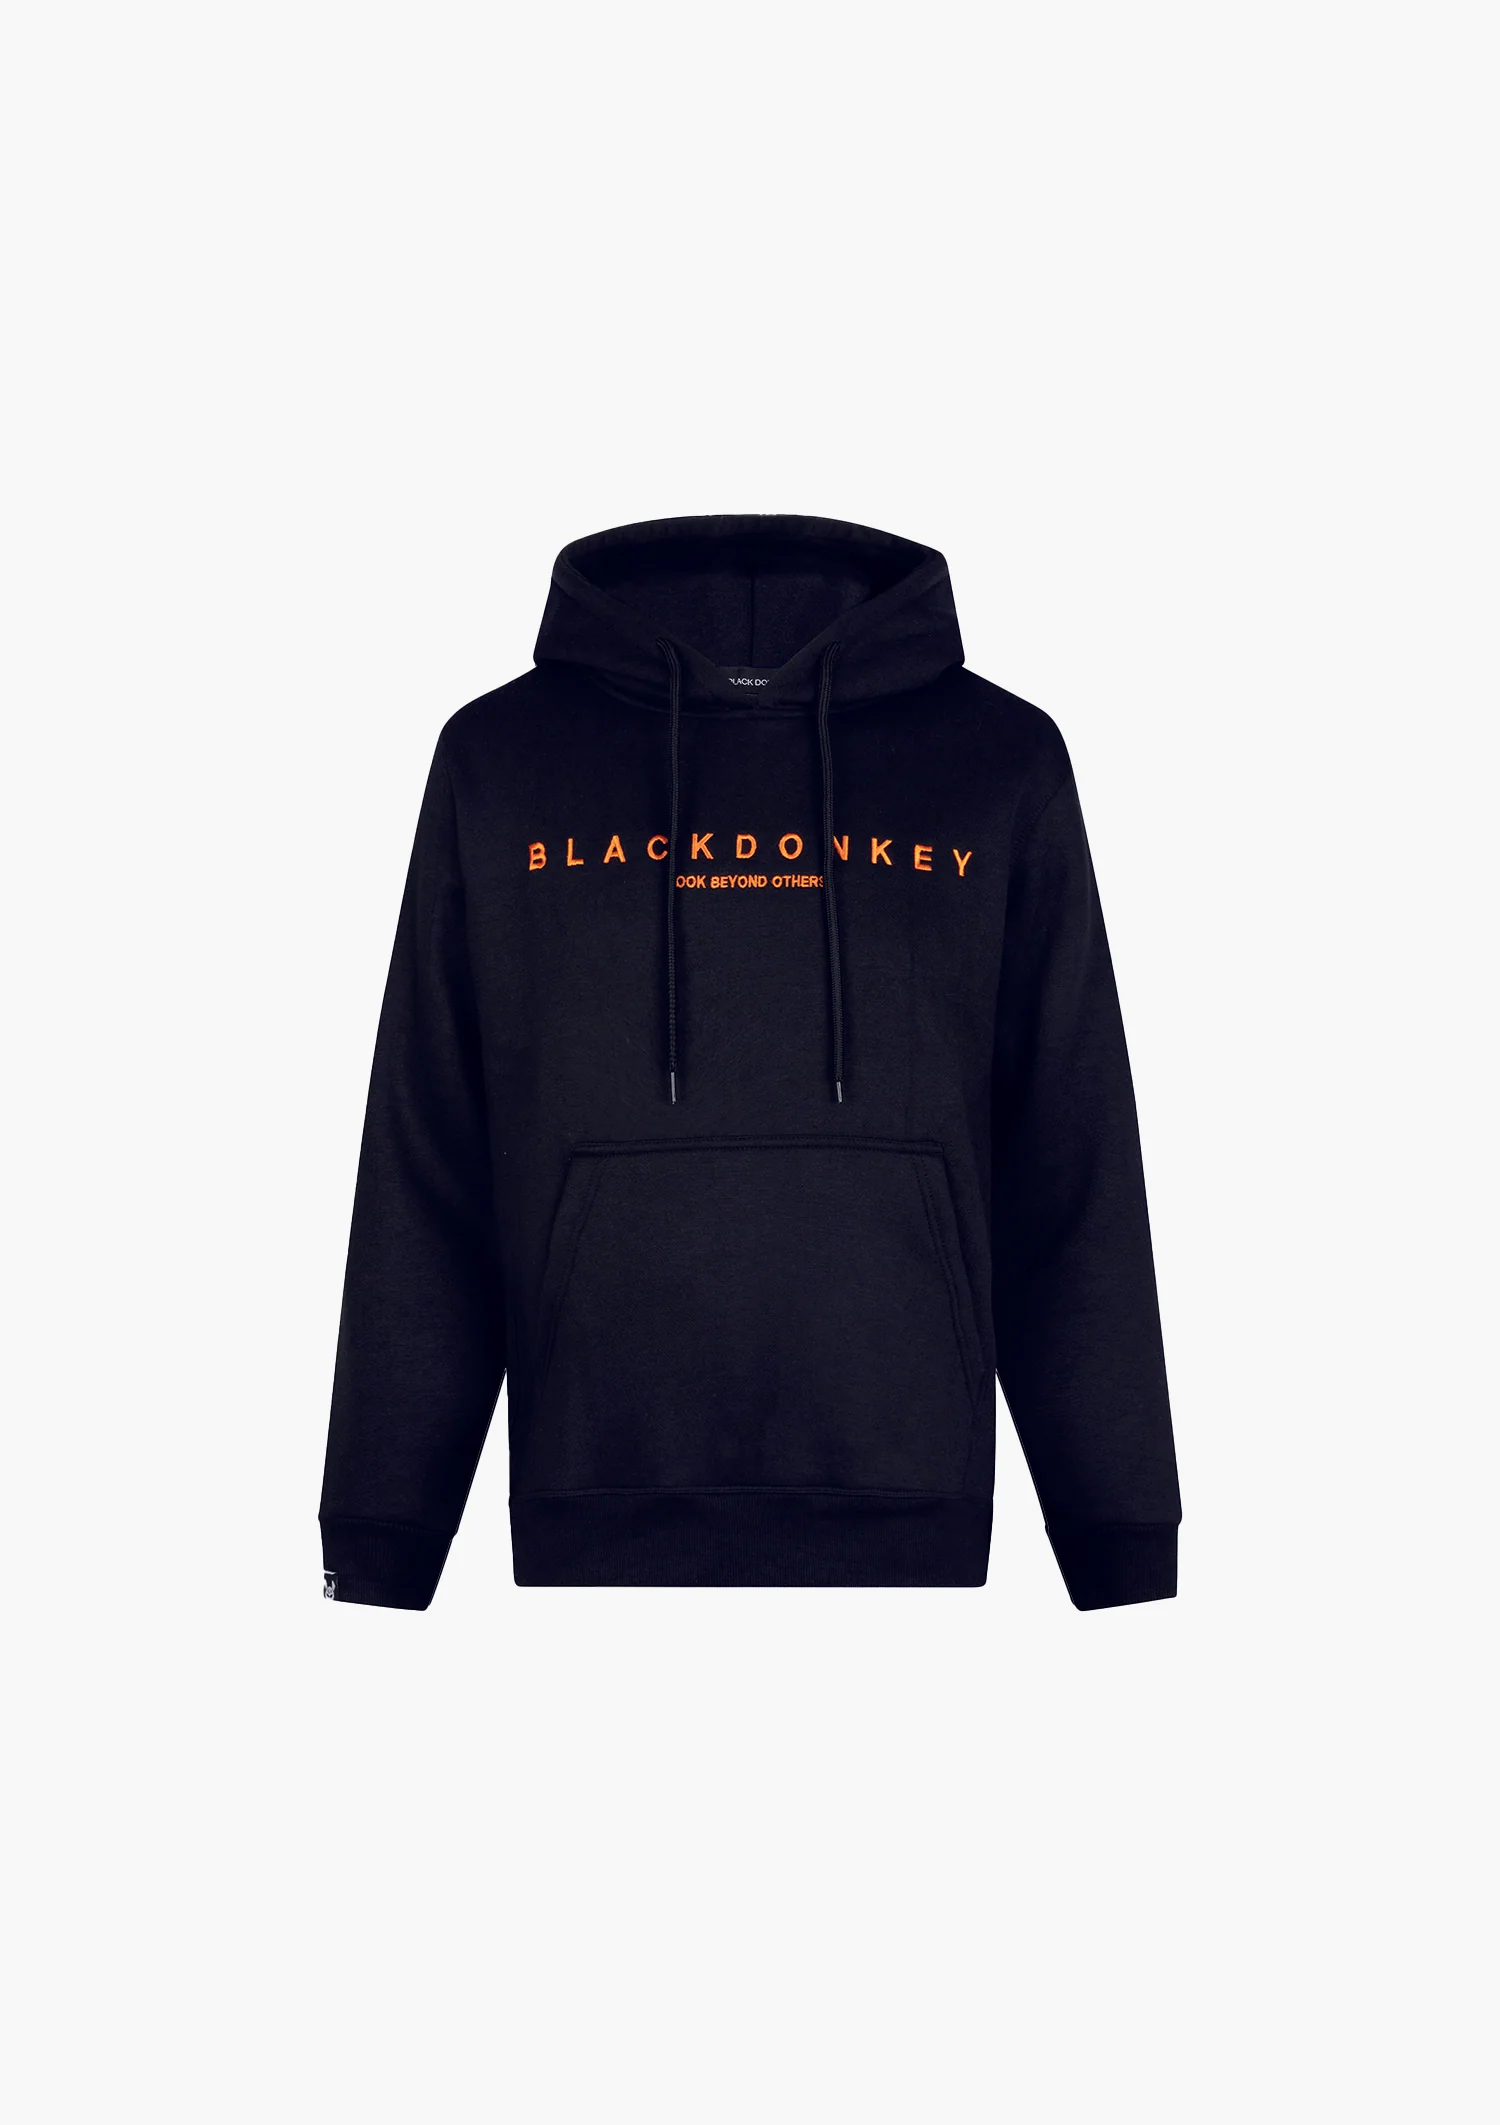 Black Donkey Ares hoodie i black/orange